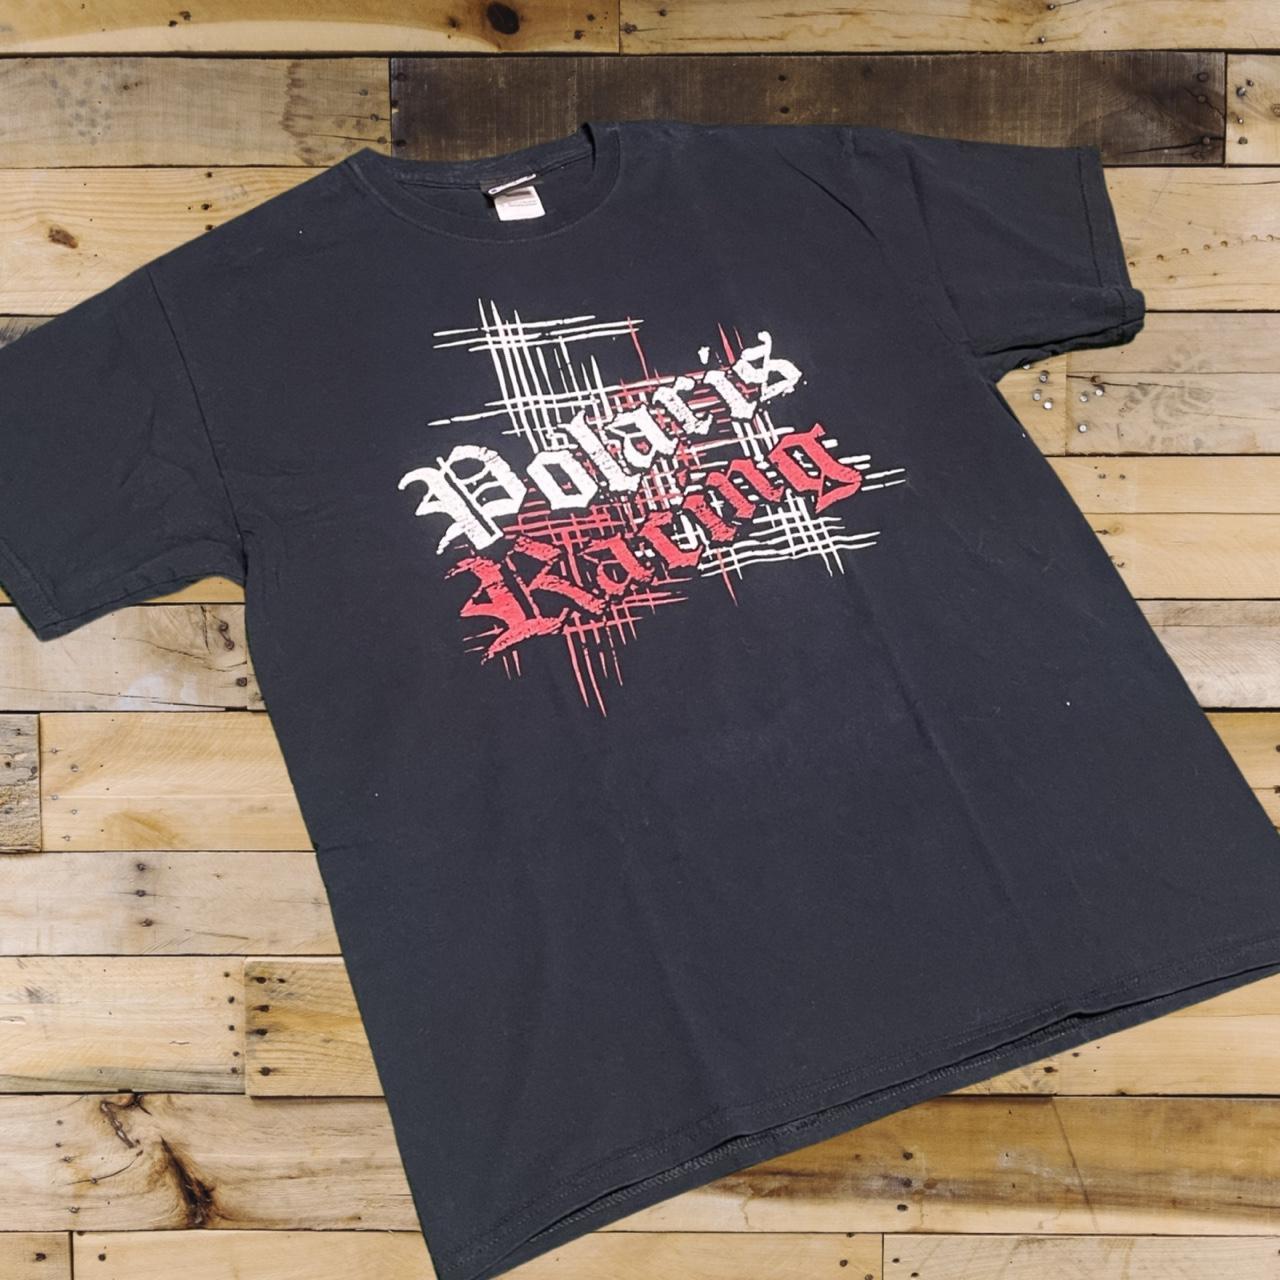 Retro Polaris Gothic Style Graphic T-Shirt. Great... - Depop